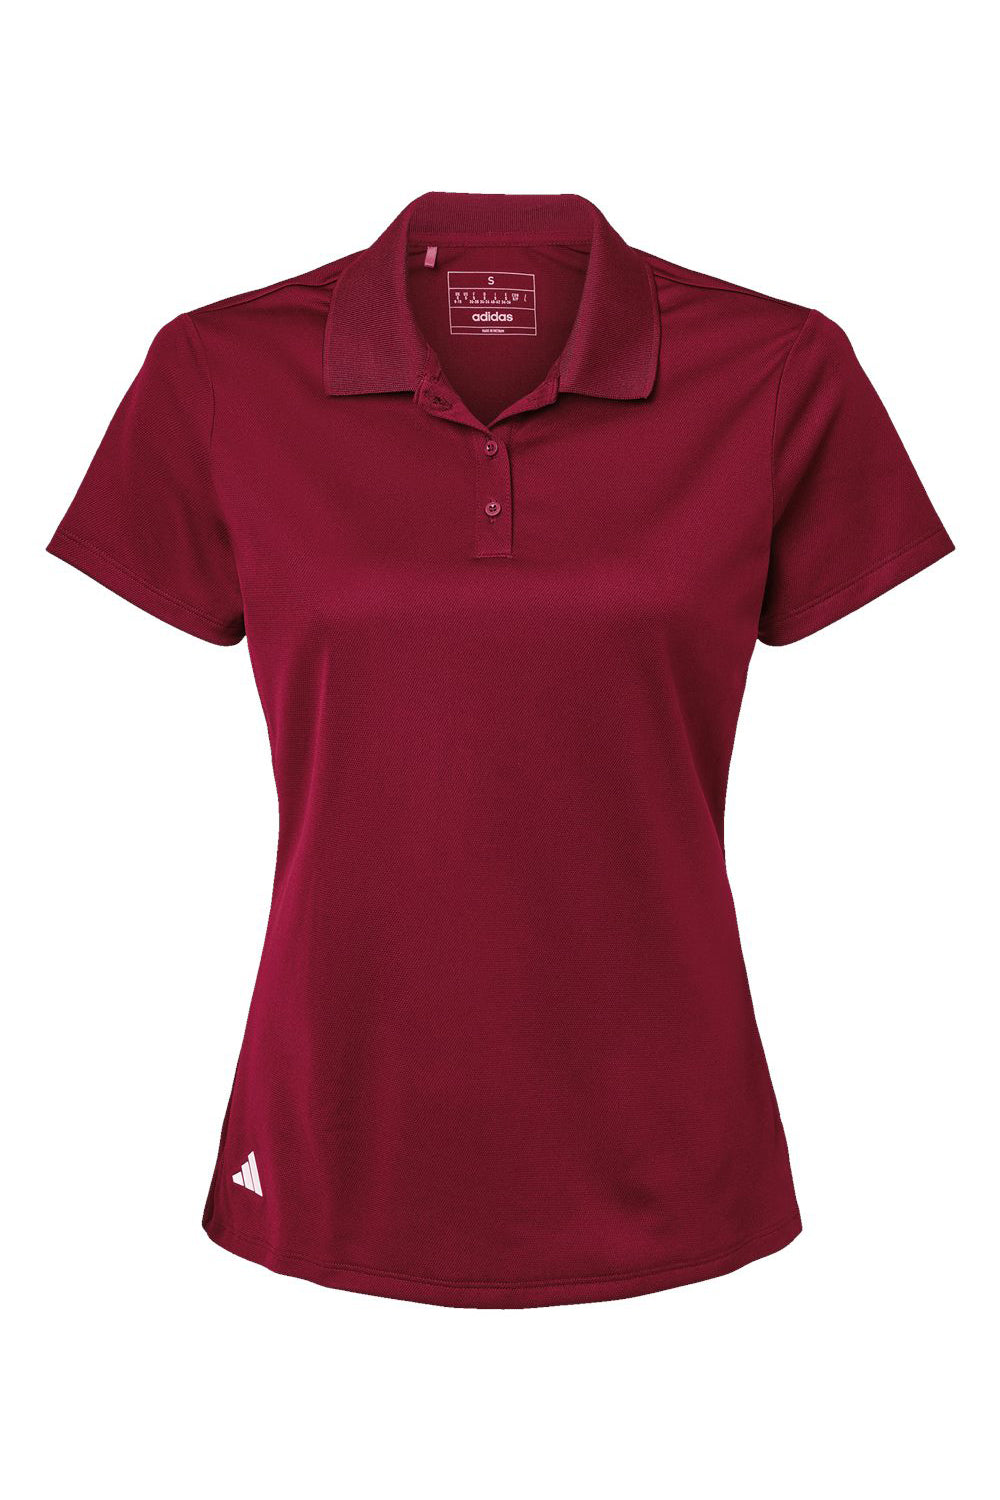 Adidas A431 Womens Basic Short Sleeve Polo Shirt Collegiate Burgundy Flat Front